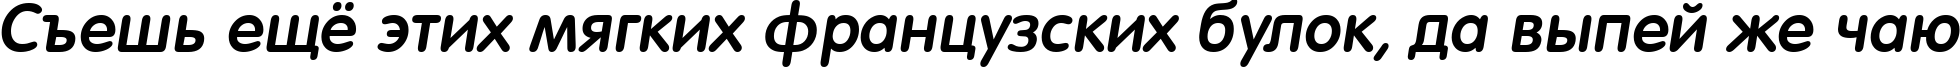 Пример написания шрифтом a_FuturaRoundDemi Italic текста на русском